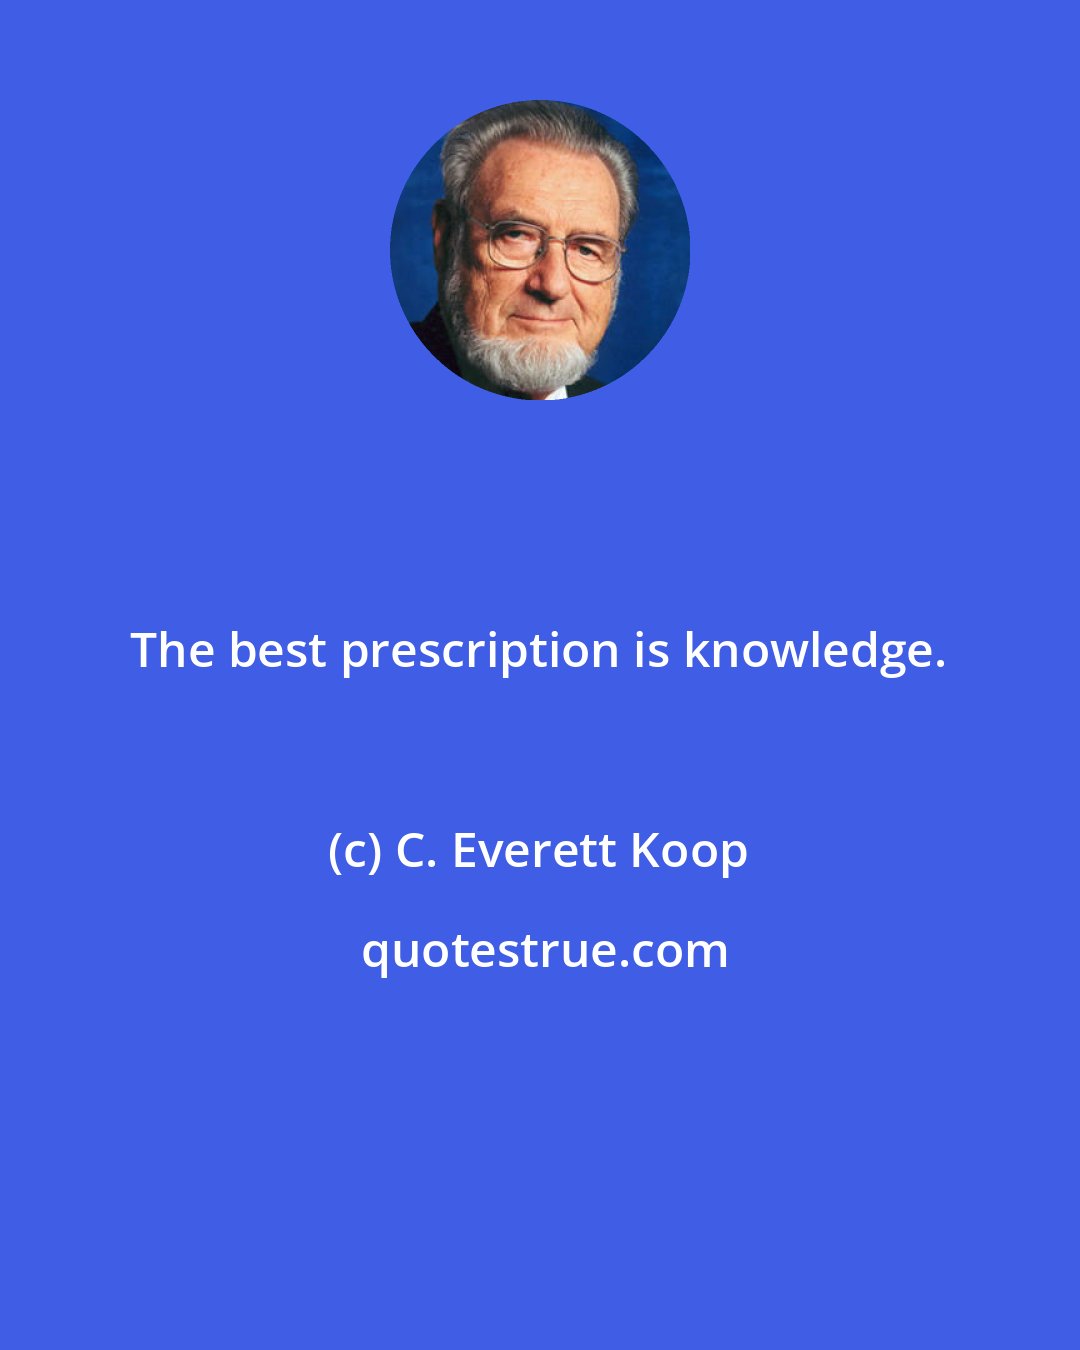 C. Everett Koop: The best prescription is knowledge.